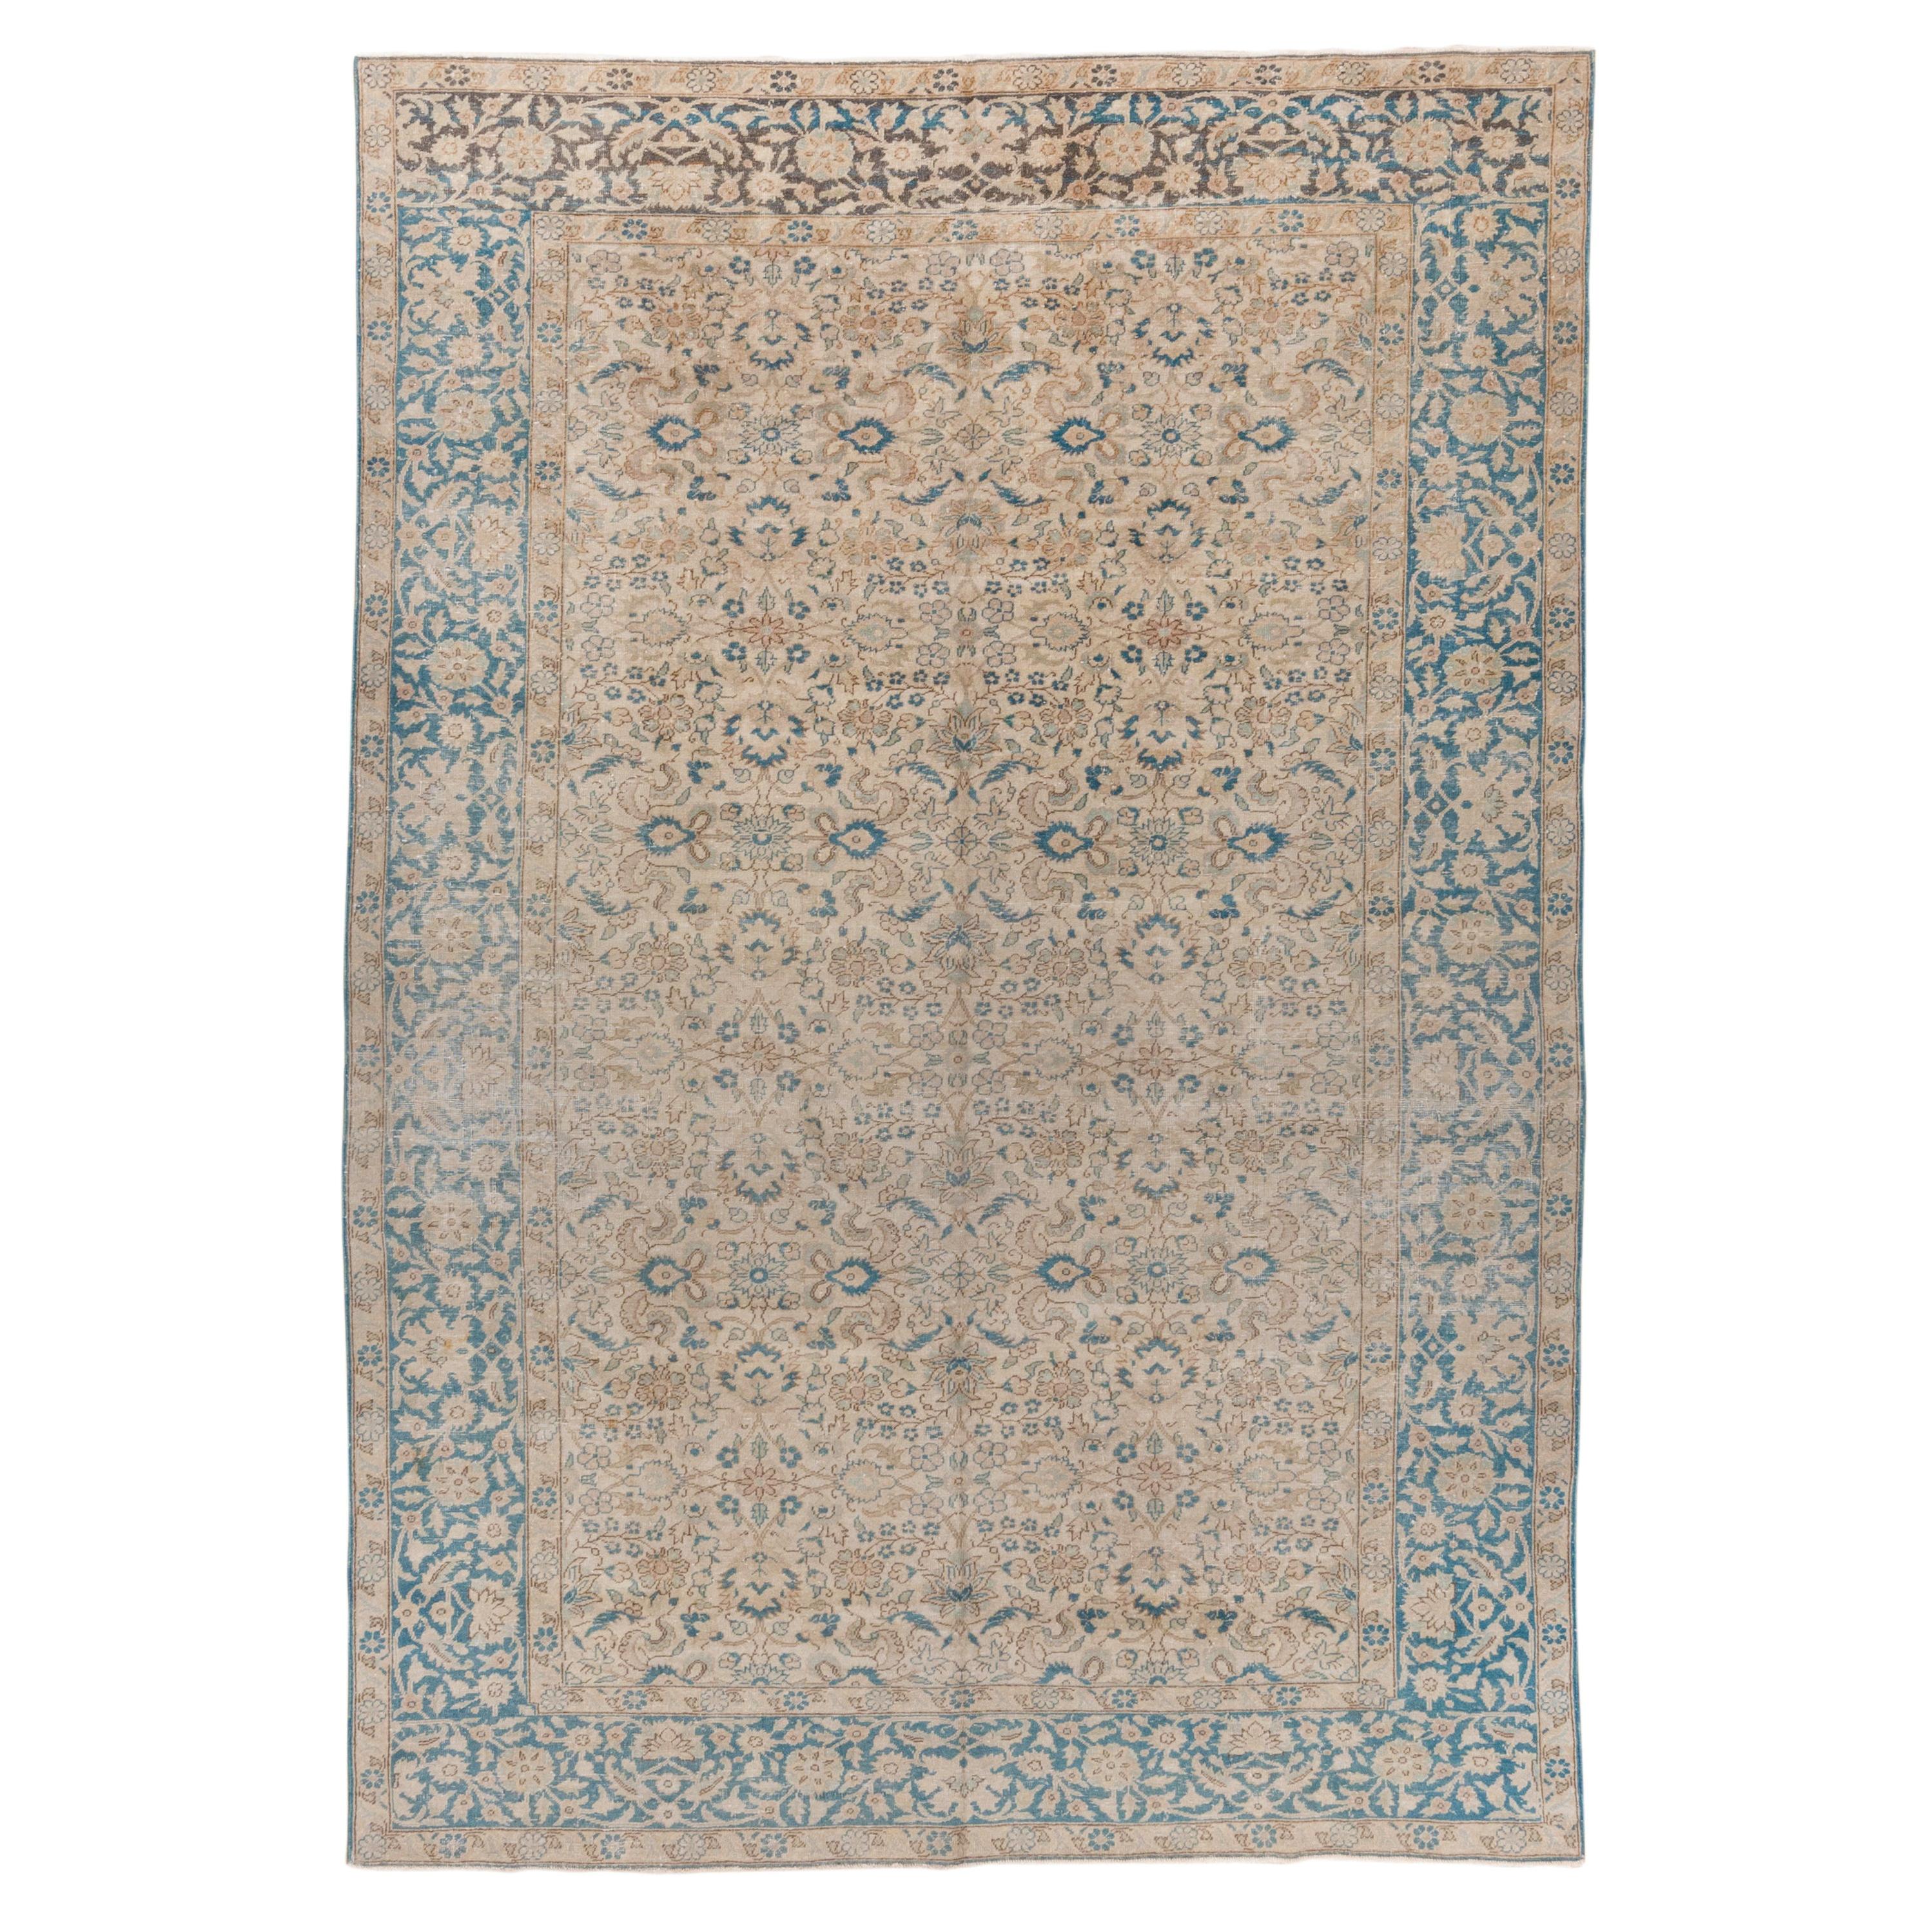 Turkish Sivas Carpet, Light Brown Field Field & Blue Borders